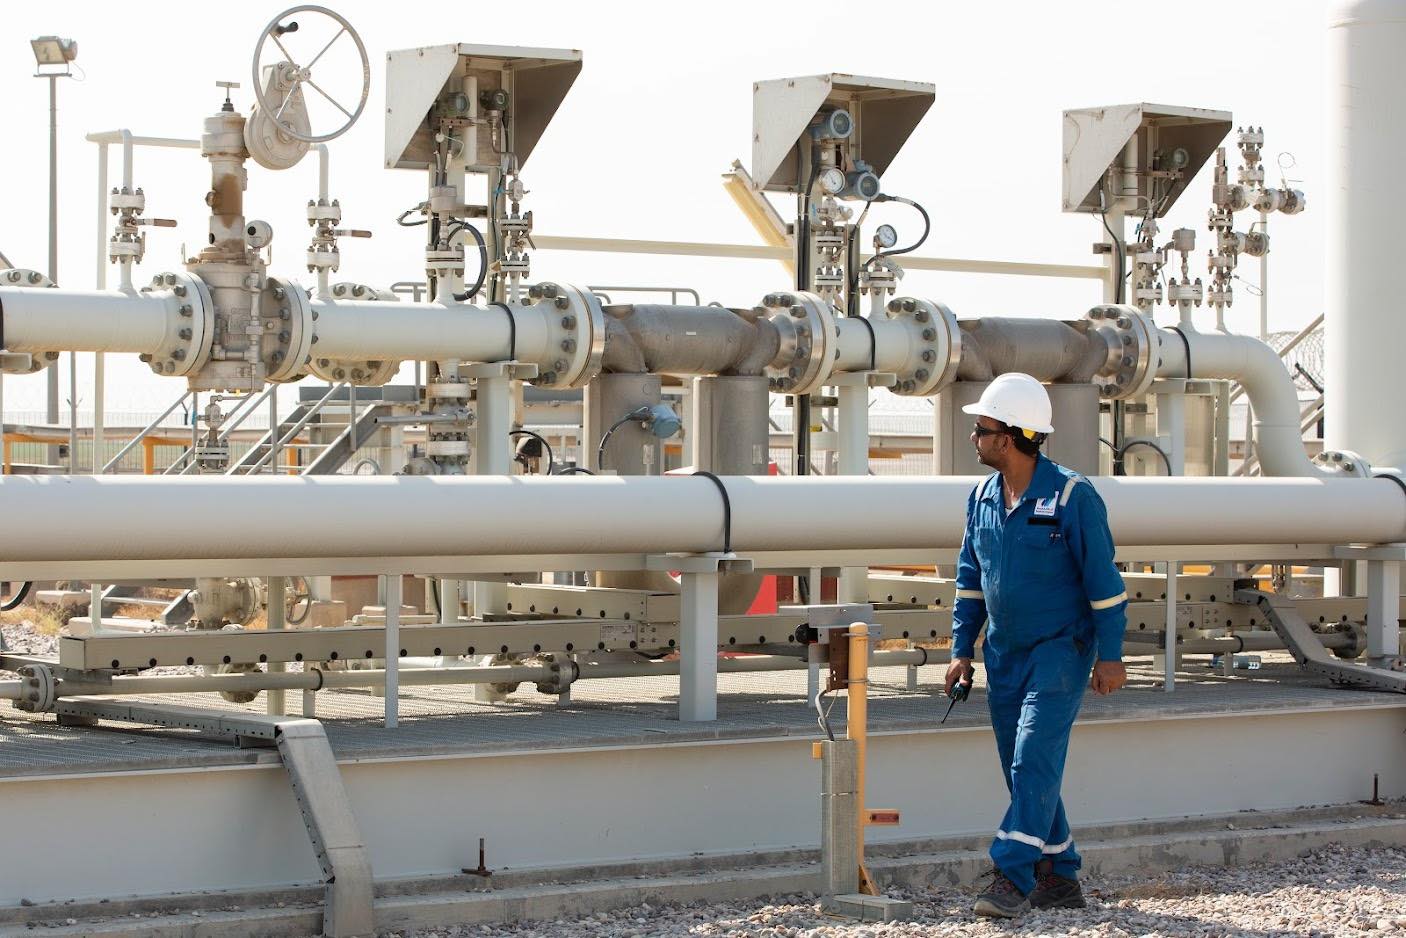 Basra crude oils' prices surge on Tuesday